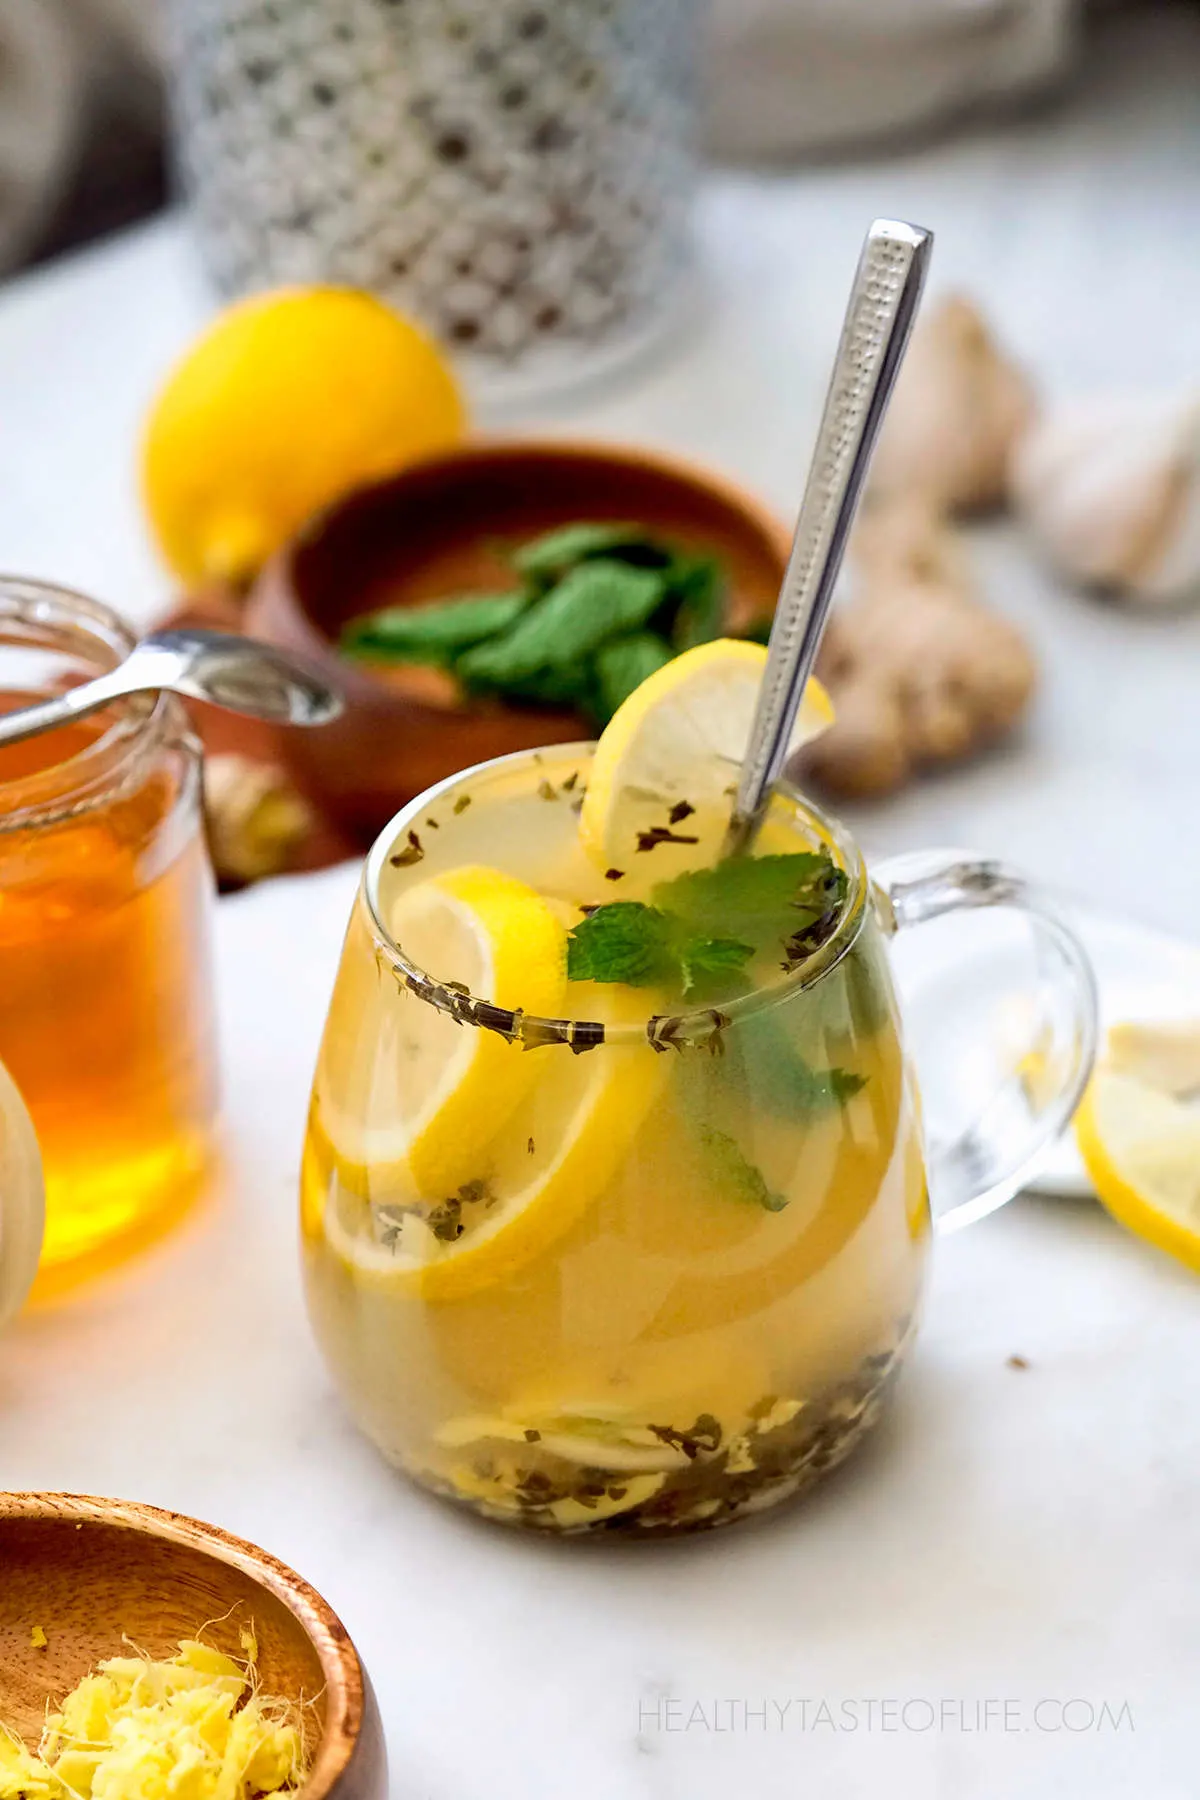 Lemon honey ginger garlic drink tea for flu. Home remedy for cold and flu season - herbal tea for cold and flu.